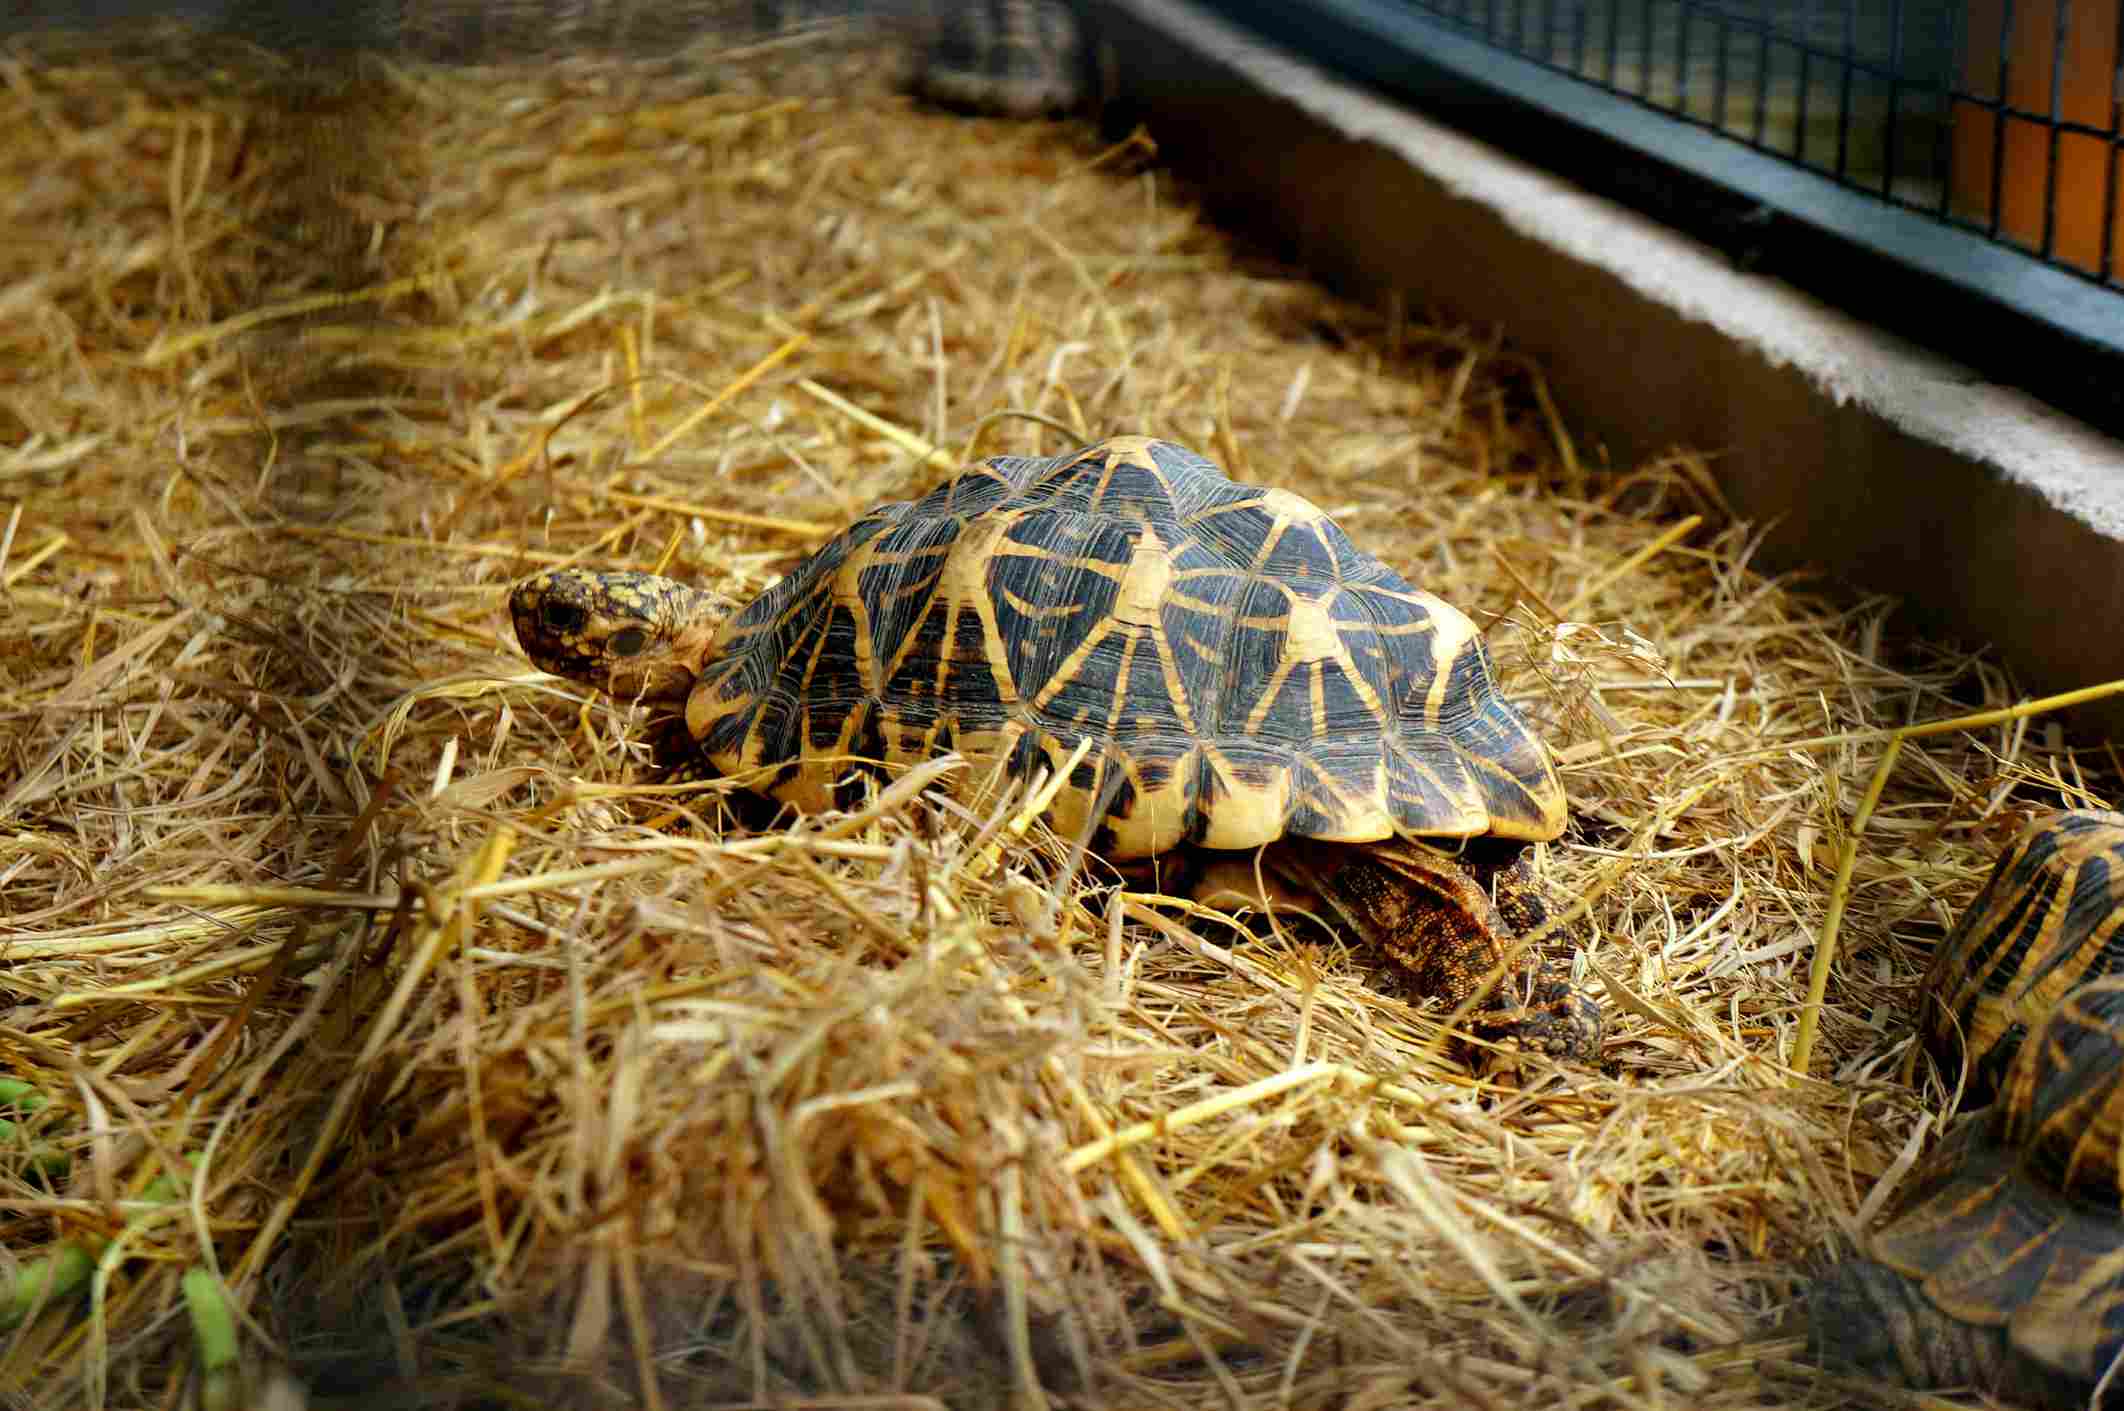 Tortoise cage